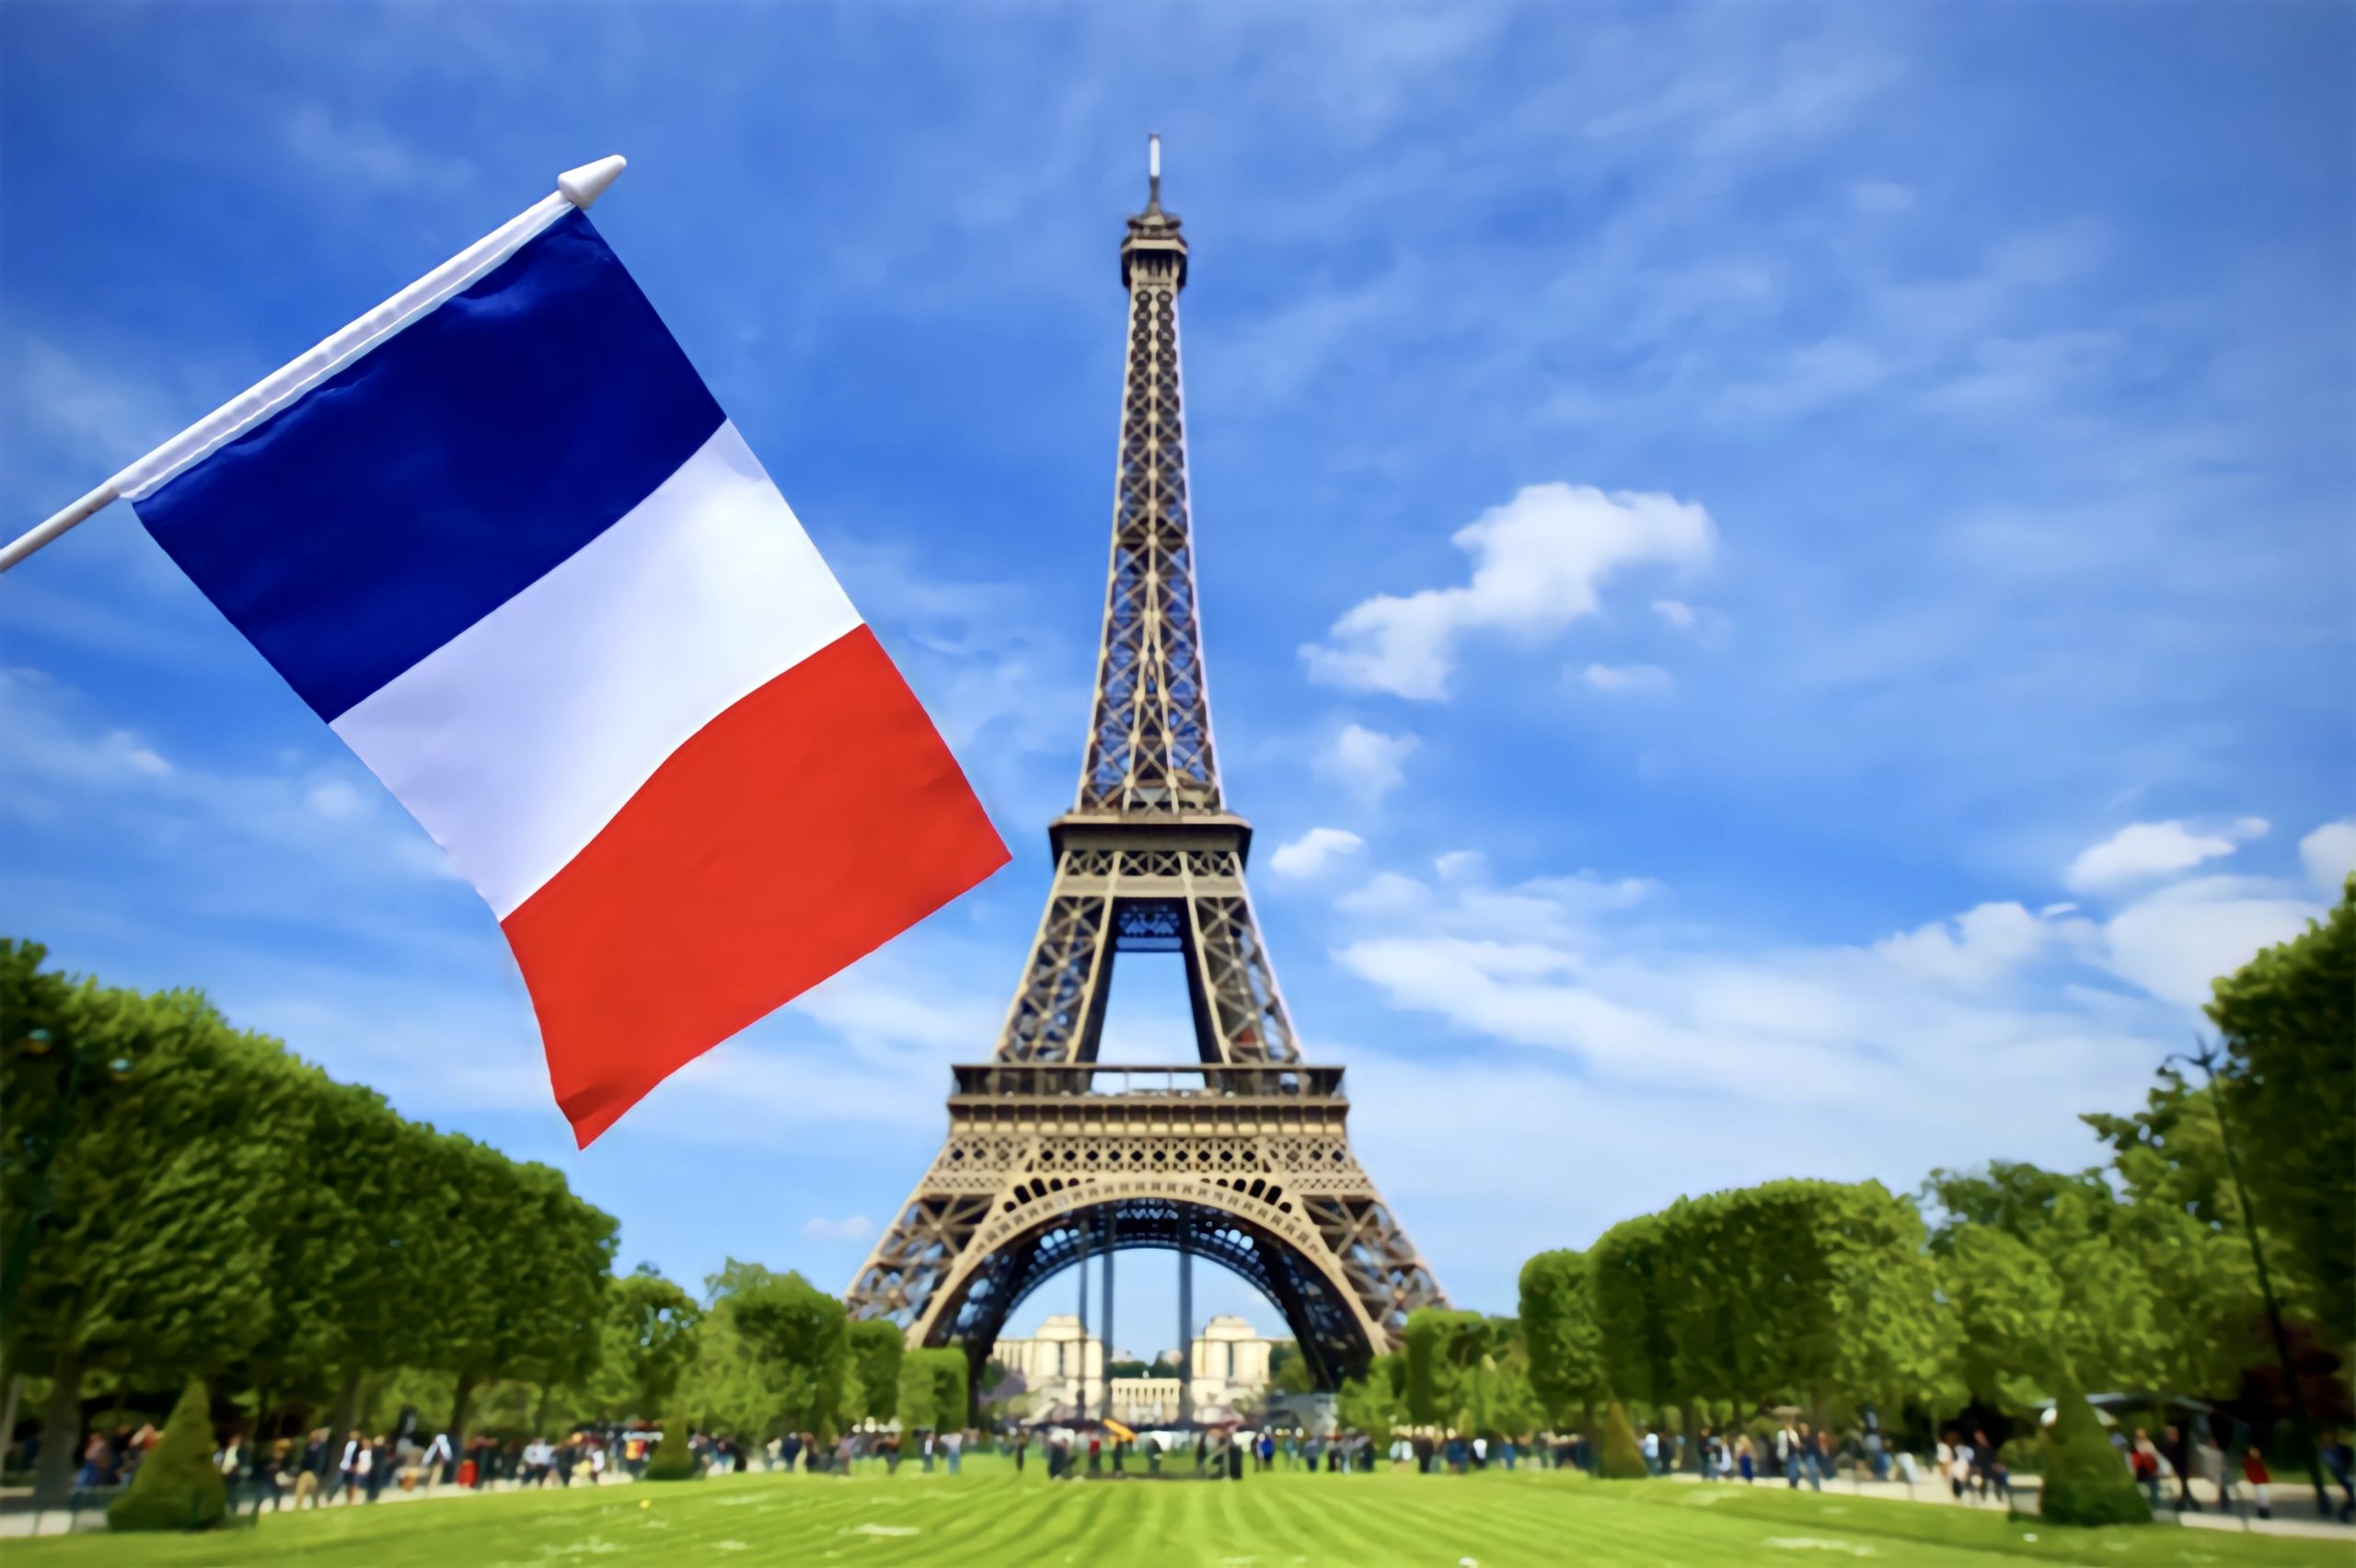 Франция ис. Эйфель башня с флагом. Флаг Парижа Франции. Эльфиева башня с флагом Франции. Символы Парижа и Франции.